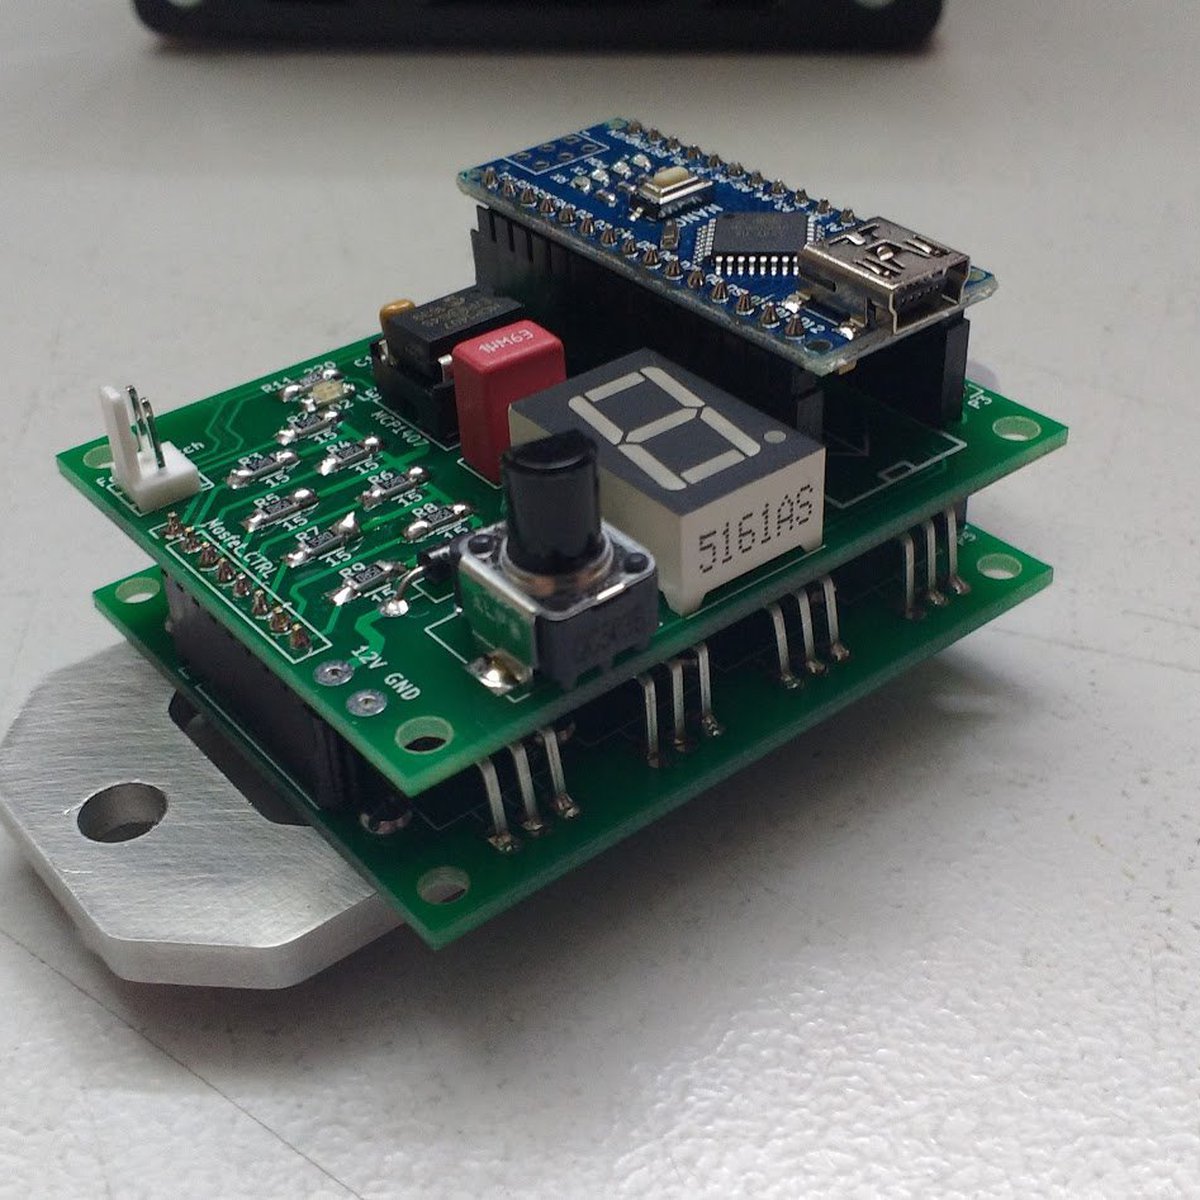 bloed Veronderstellen Dubbelzinnigheid DIY Arduino Battery Spot Welder V2 Prebuilt Kit from KaeptnBalu on Tindie